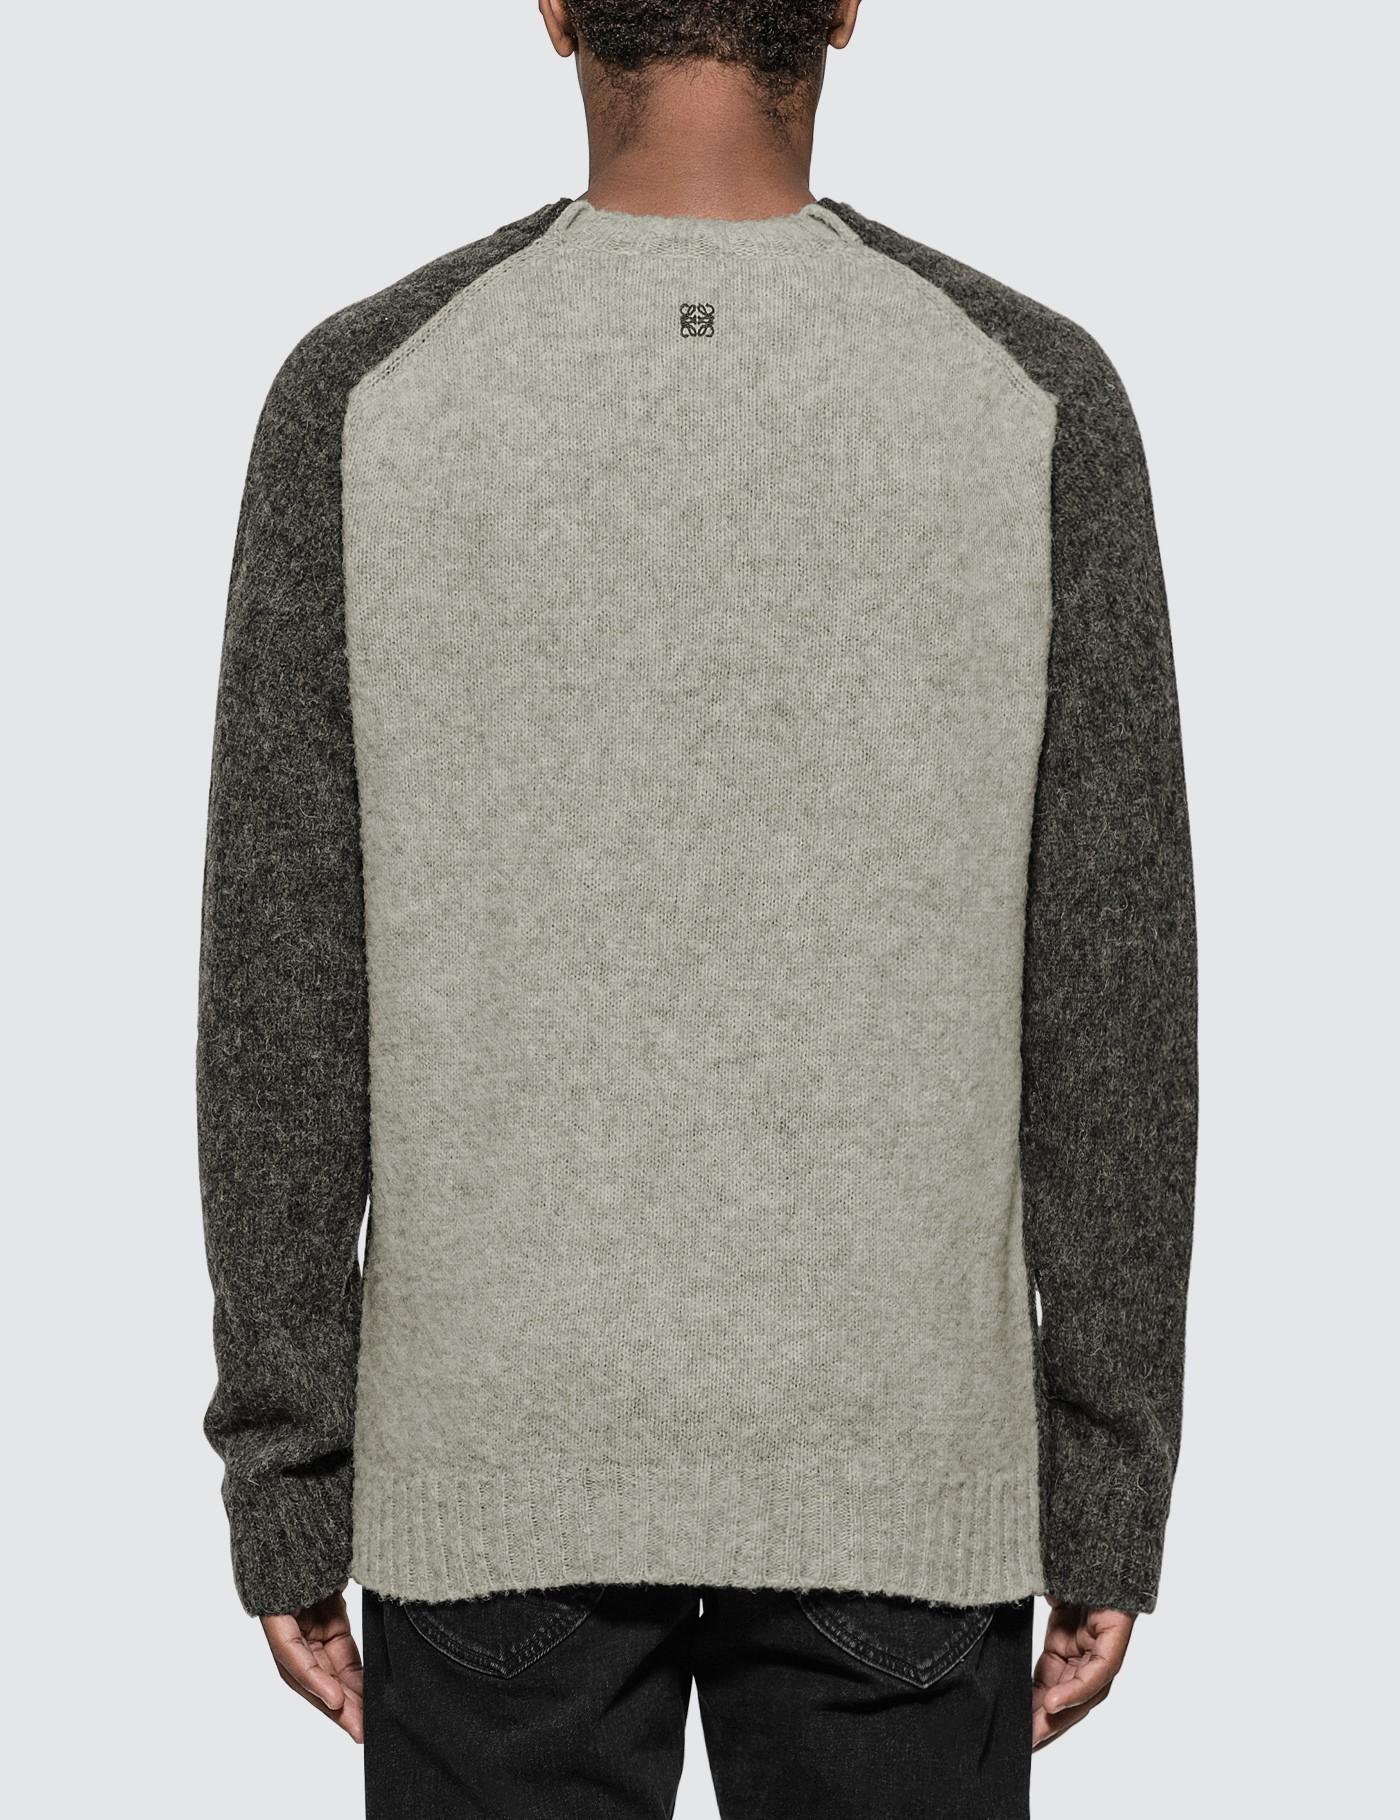 Loewe Wool Melange Sweater in Grey (Gray) for Men - Lyst